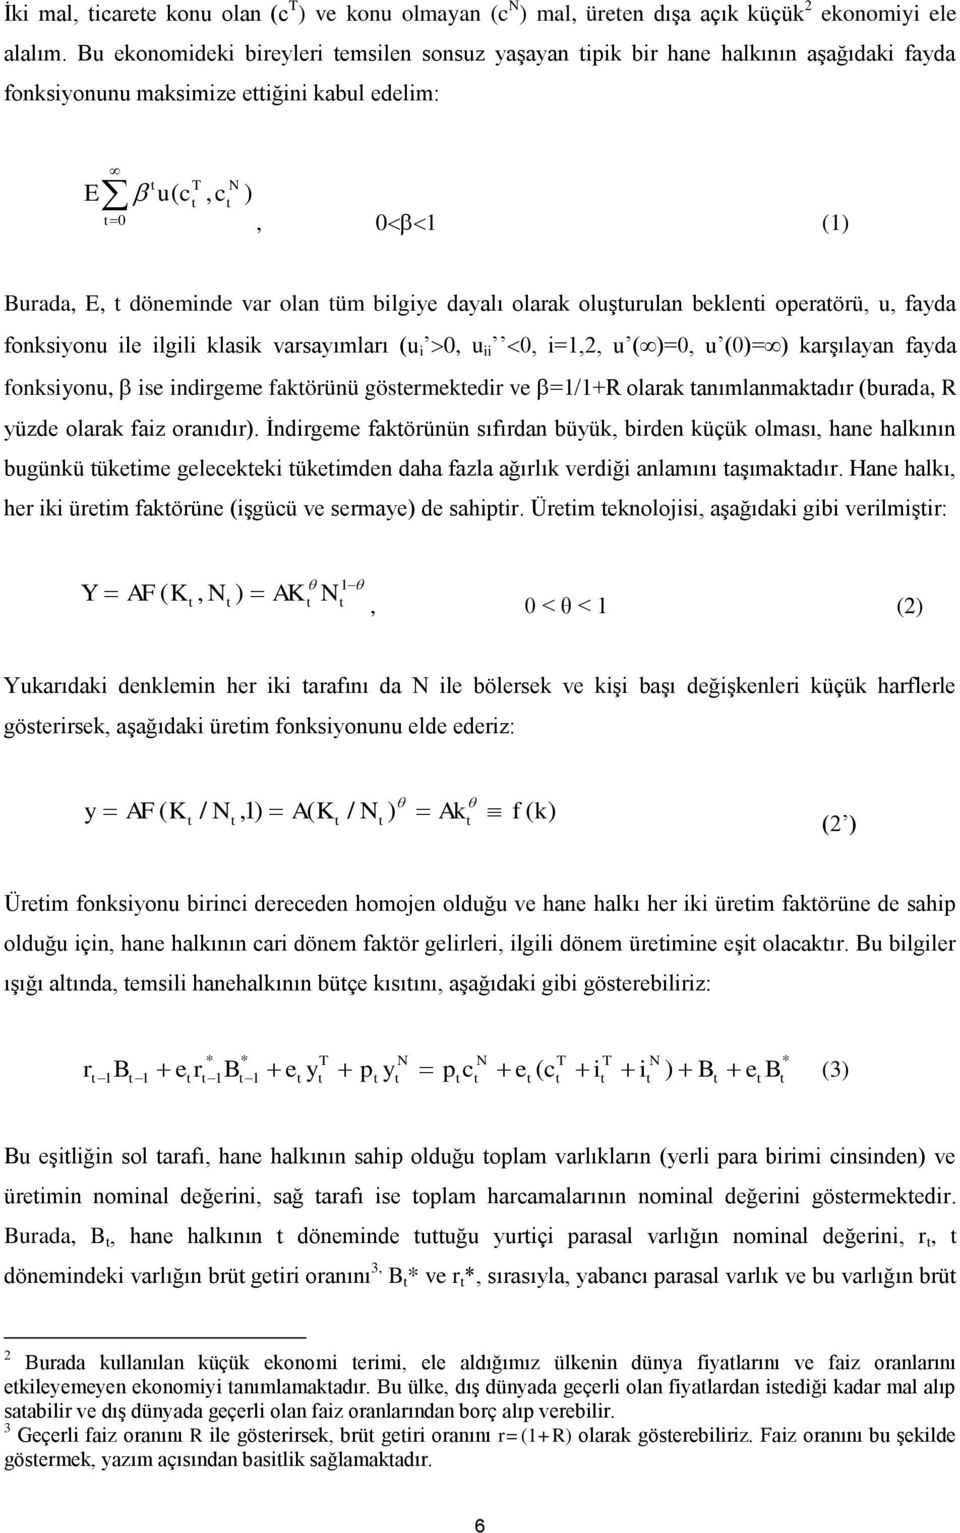 bklni opraörü, u, fayda fonksiyonu il ilgili klasik varsayımları (u i 0, u ii 0, i=,2, u ()=0, u (0)=) karşılayan fayda fonksiyonu, is indirgm fakörünü gösrmkdir v =/+R olarak anımlanmakadır (burada,